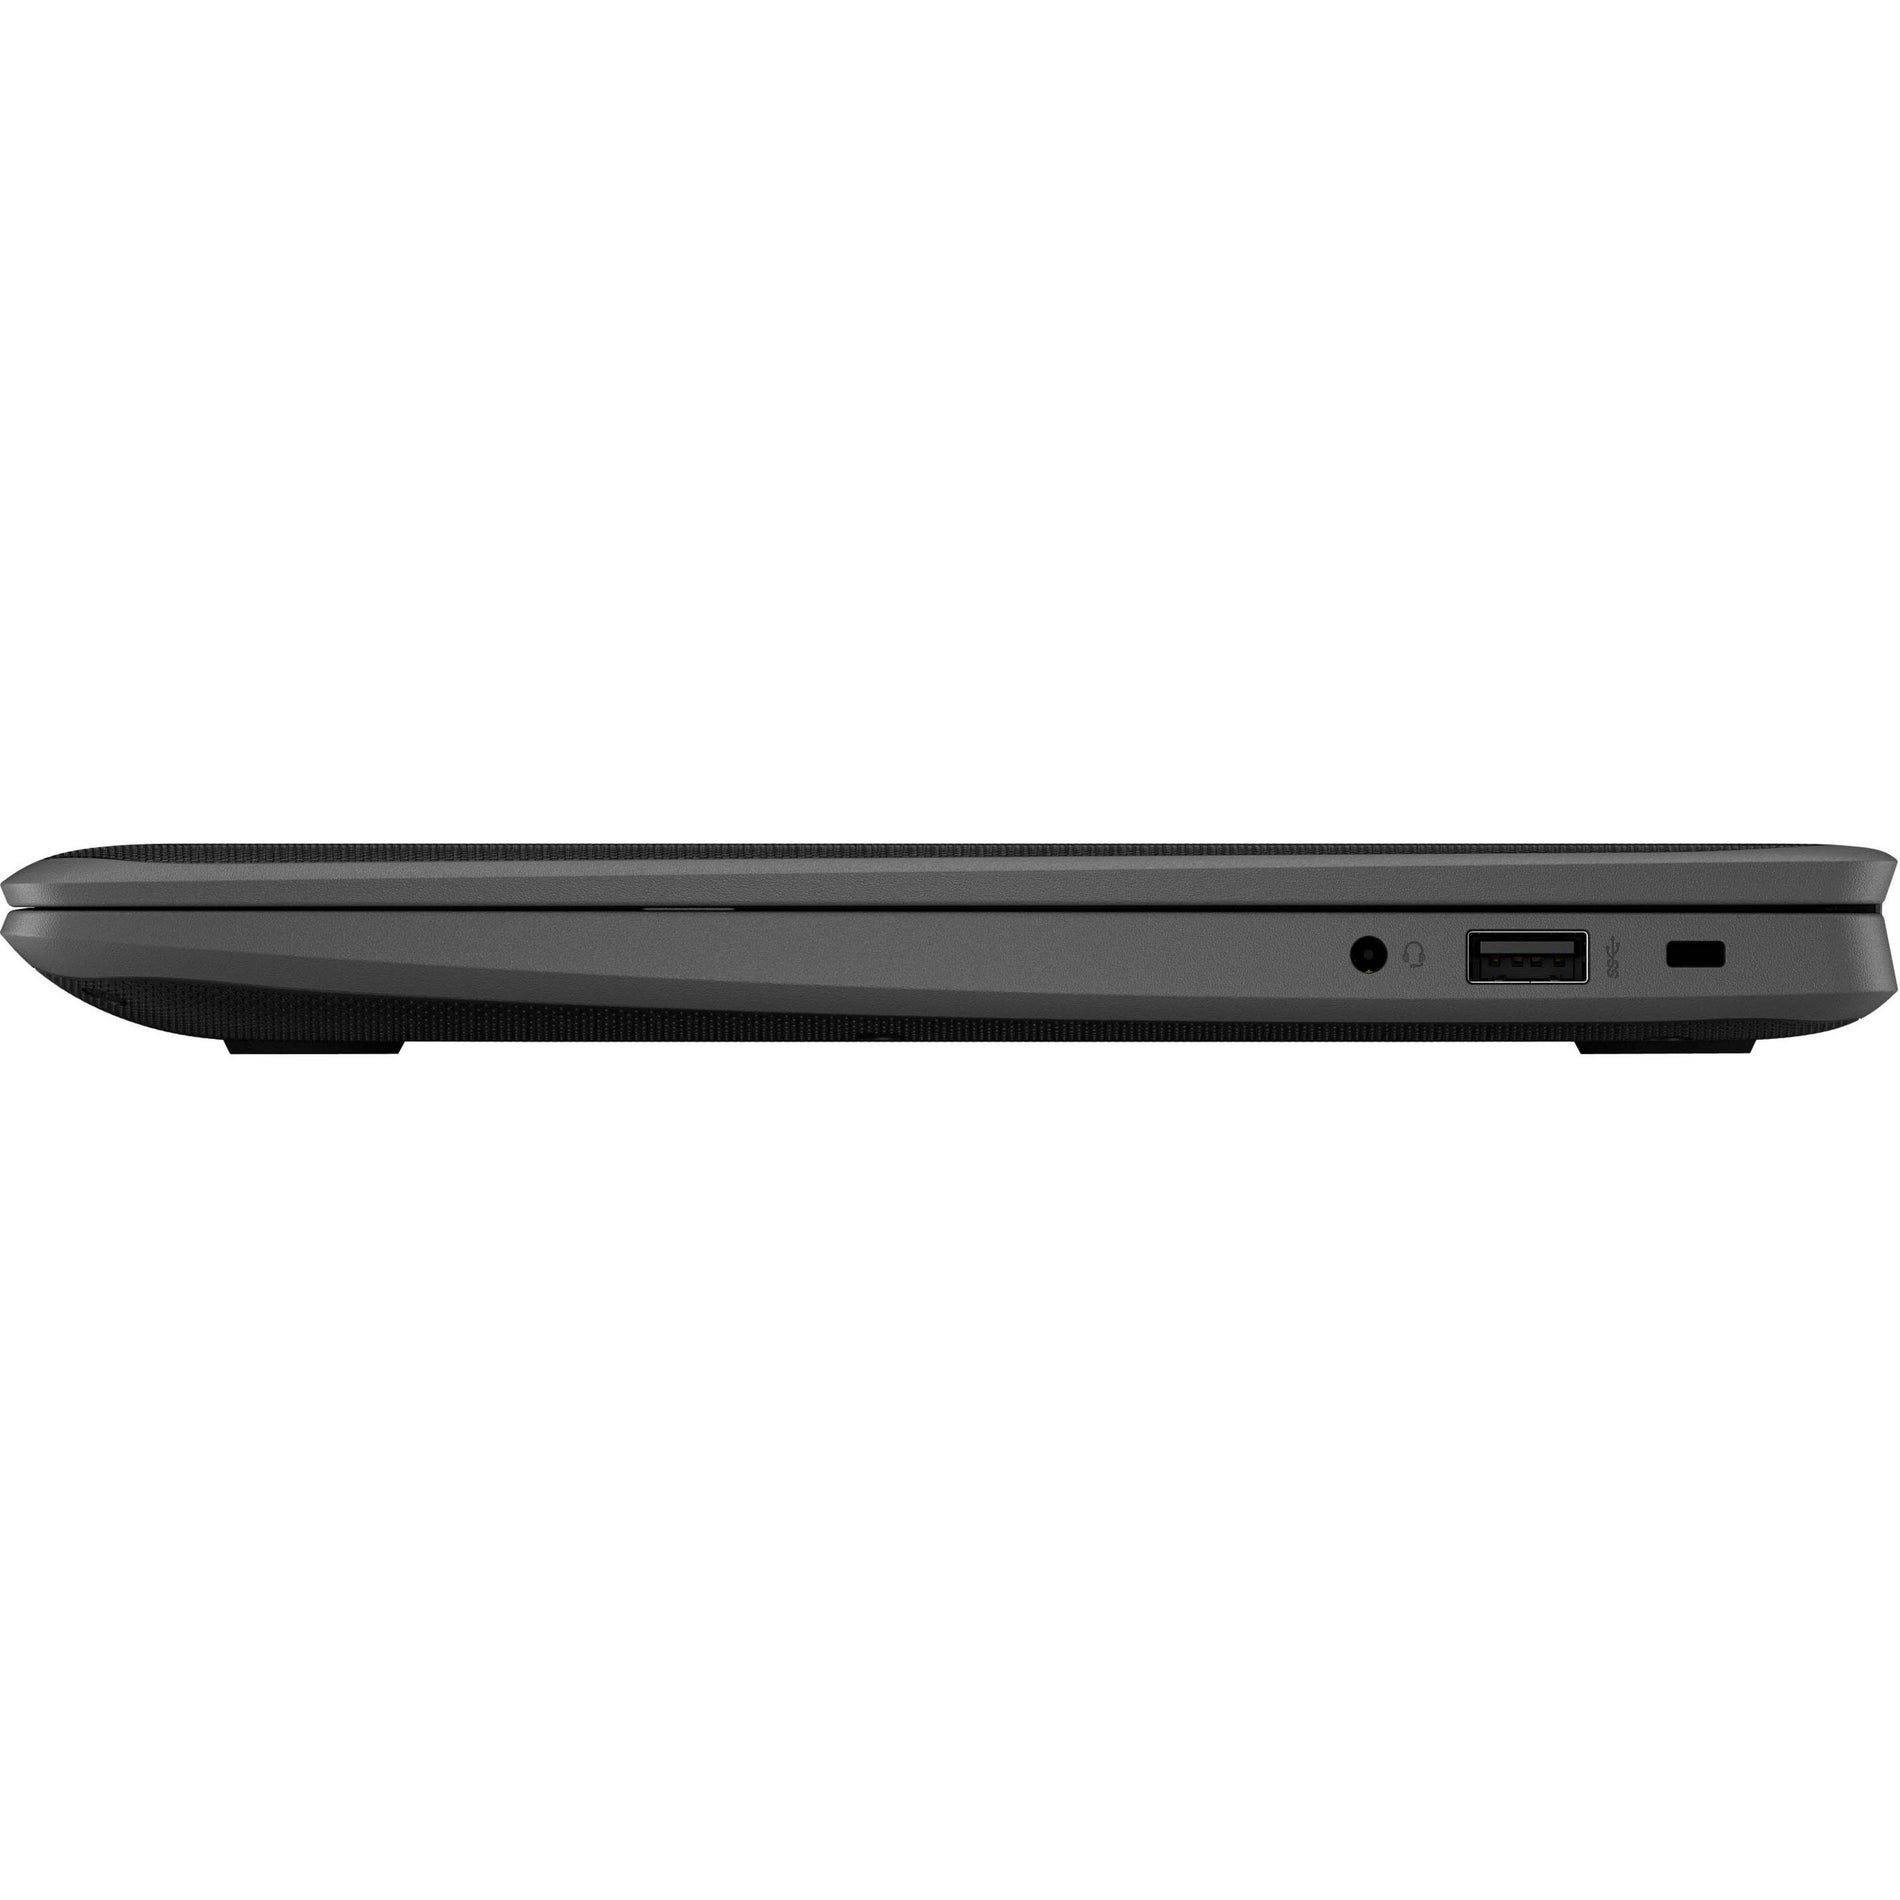 HP ProBook Fortis 14 inch G9 Notebook PC, HD Display, Intel Celeron N4500, 4GB RAM, 64GB Flash Memory